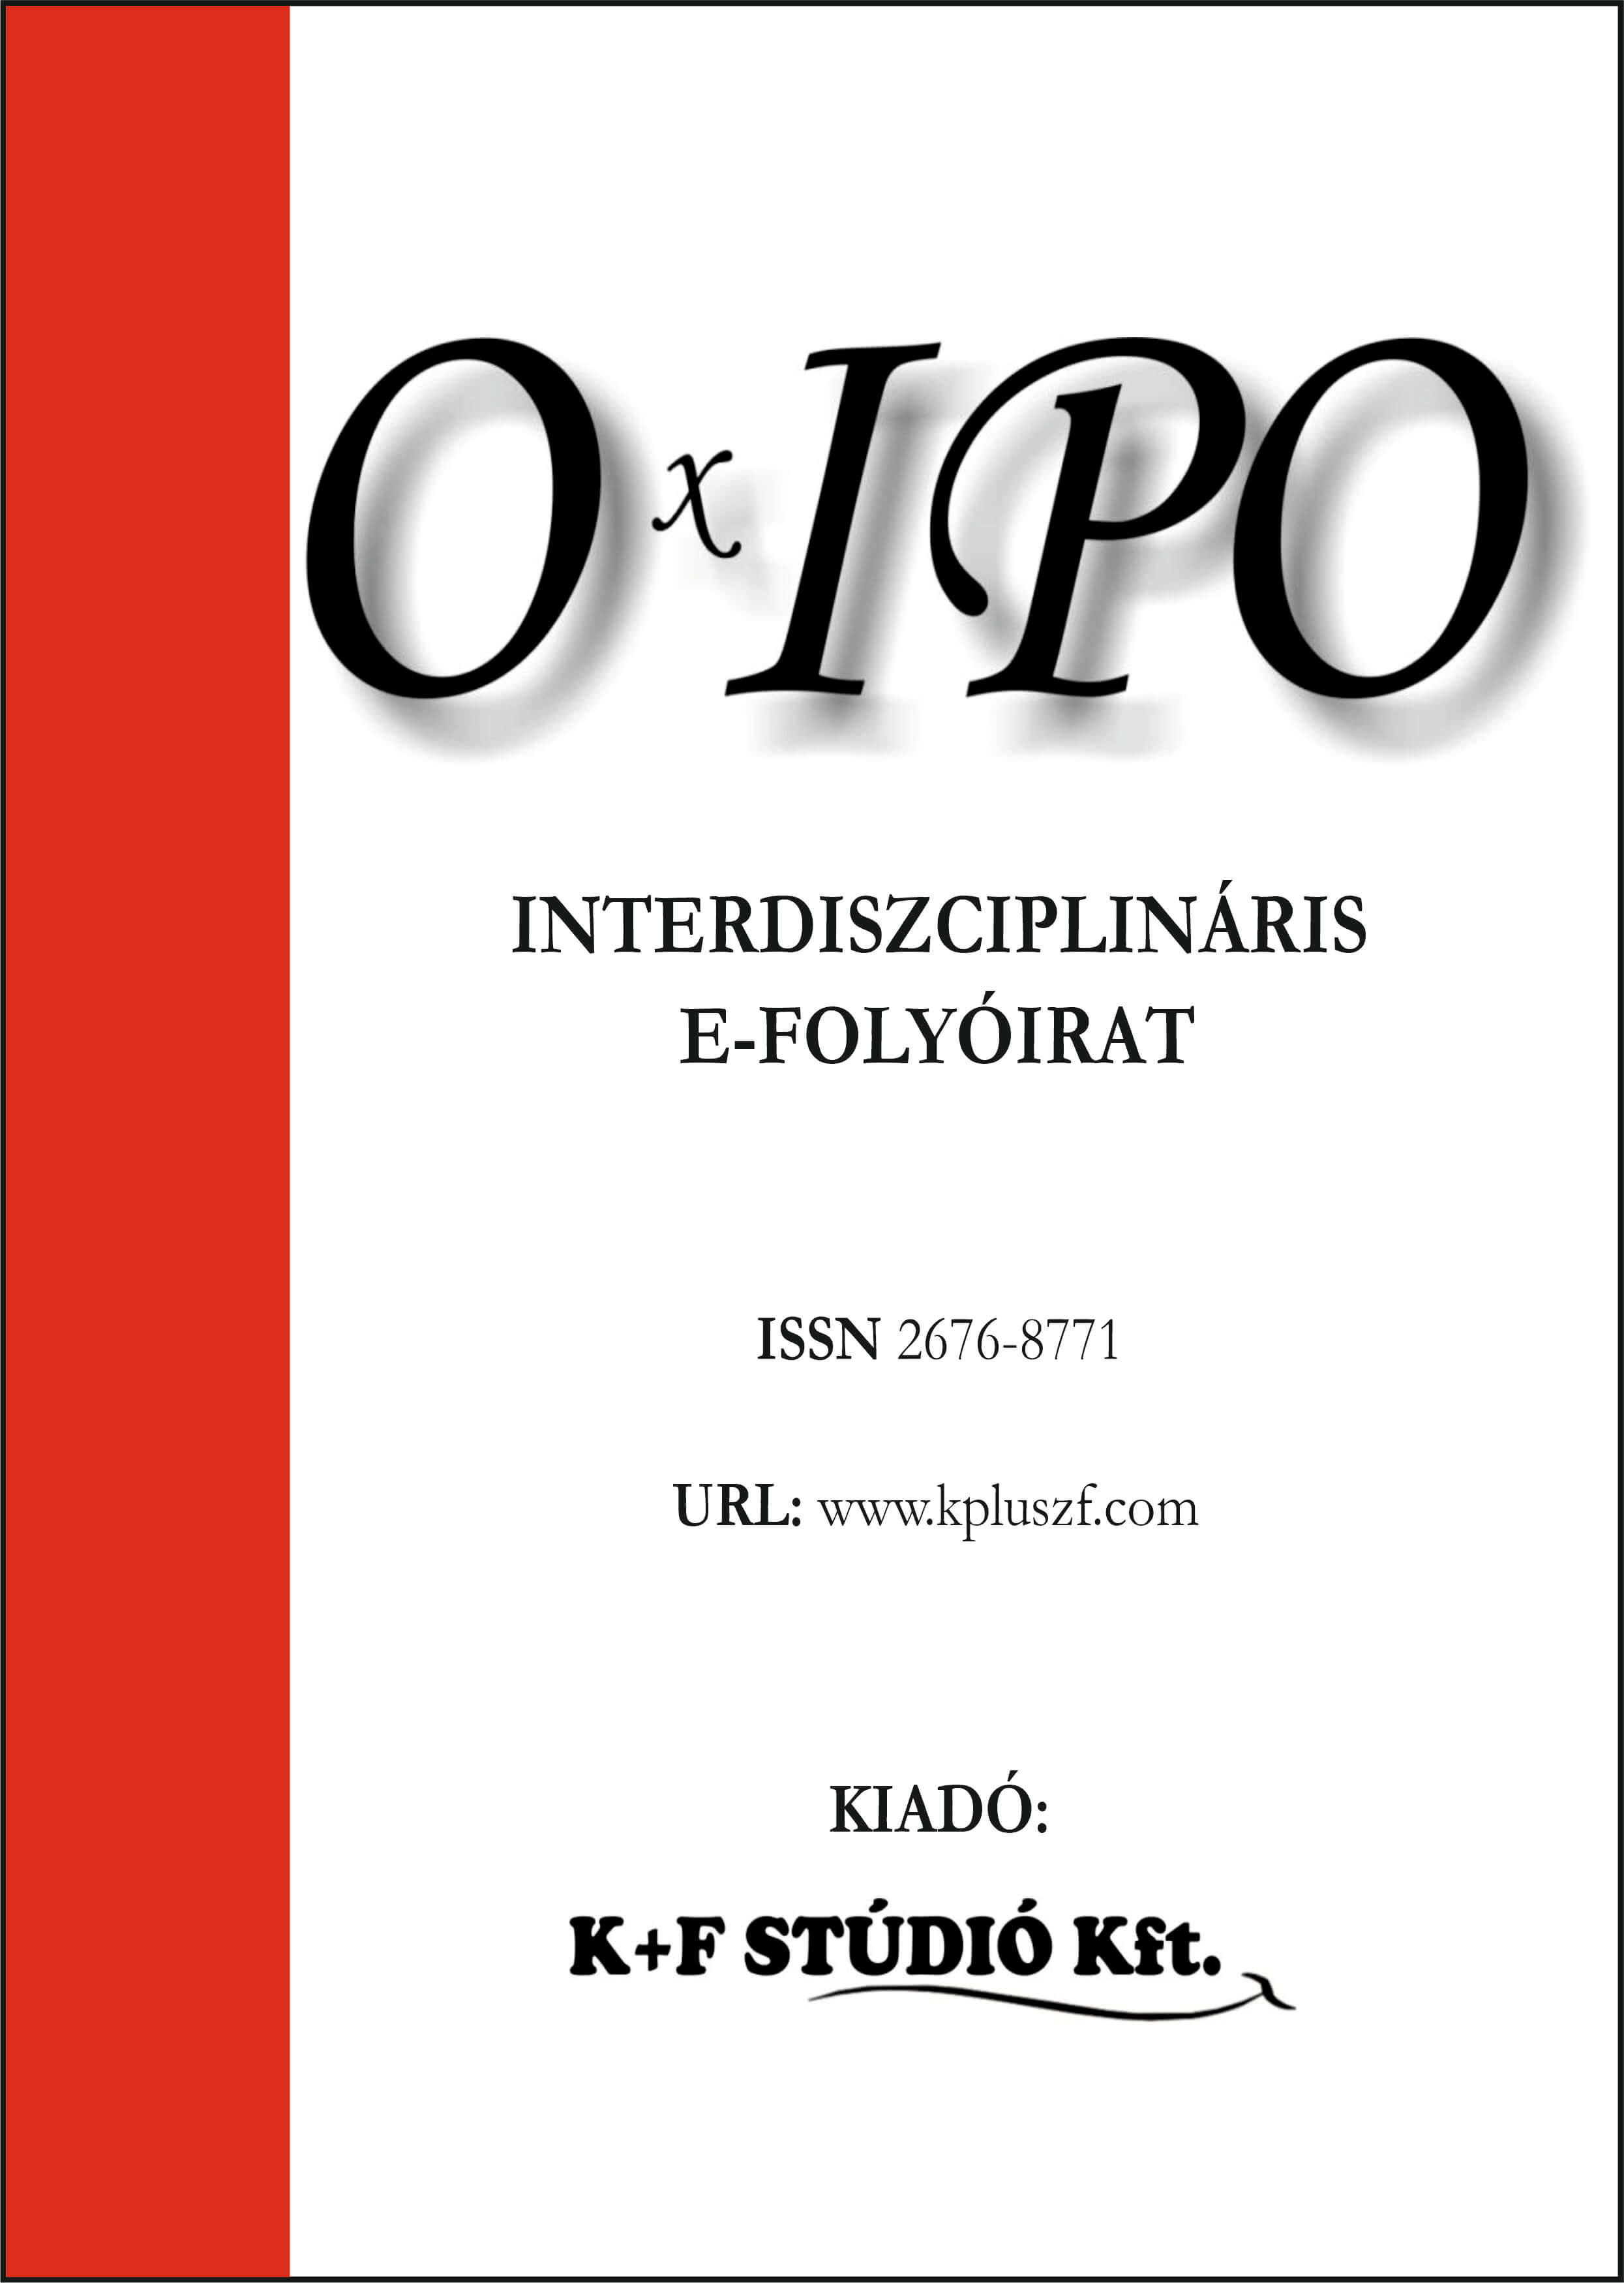 OxIPO Journal